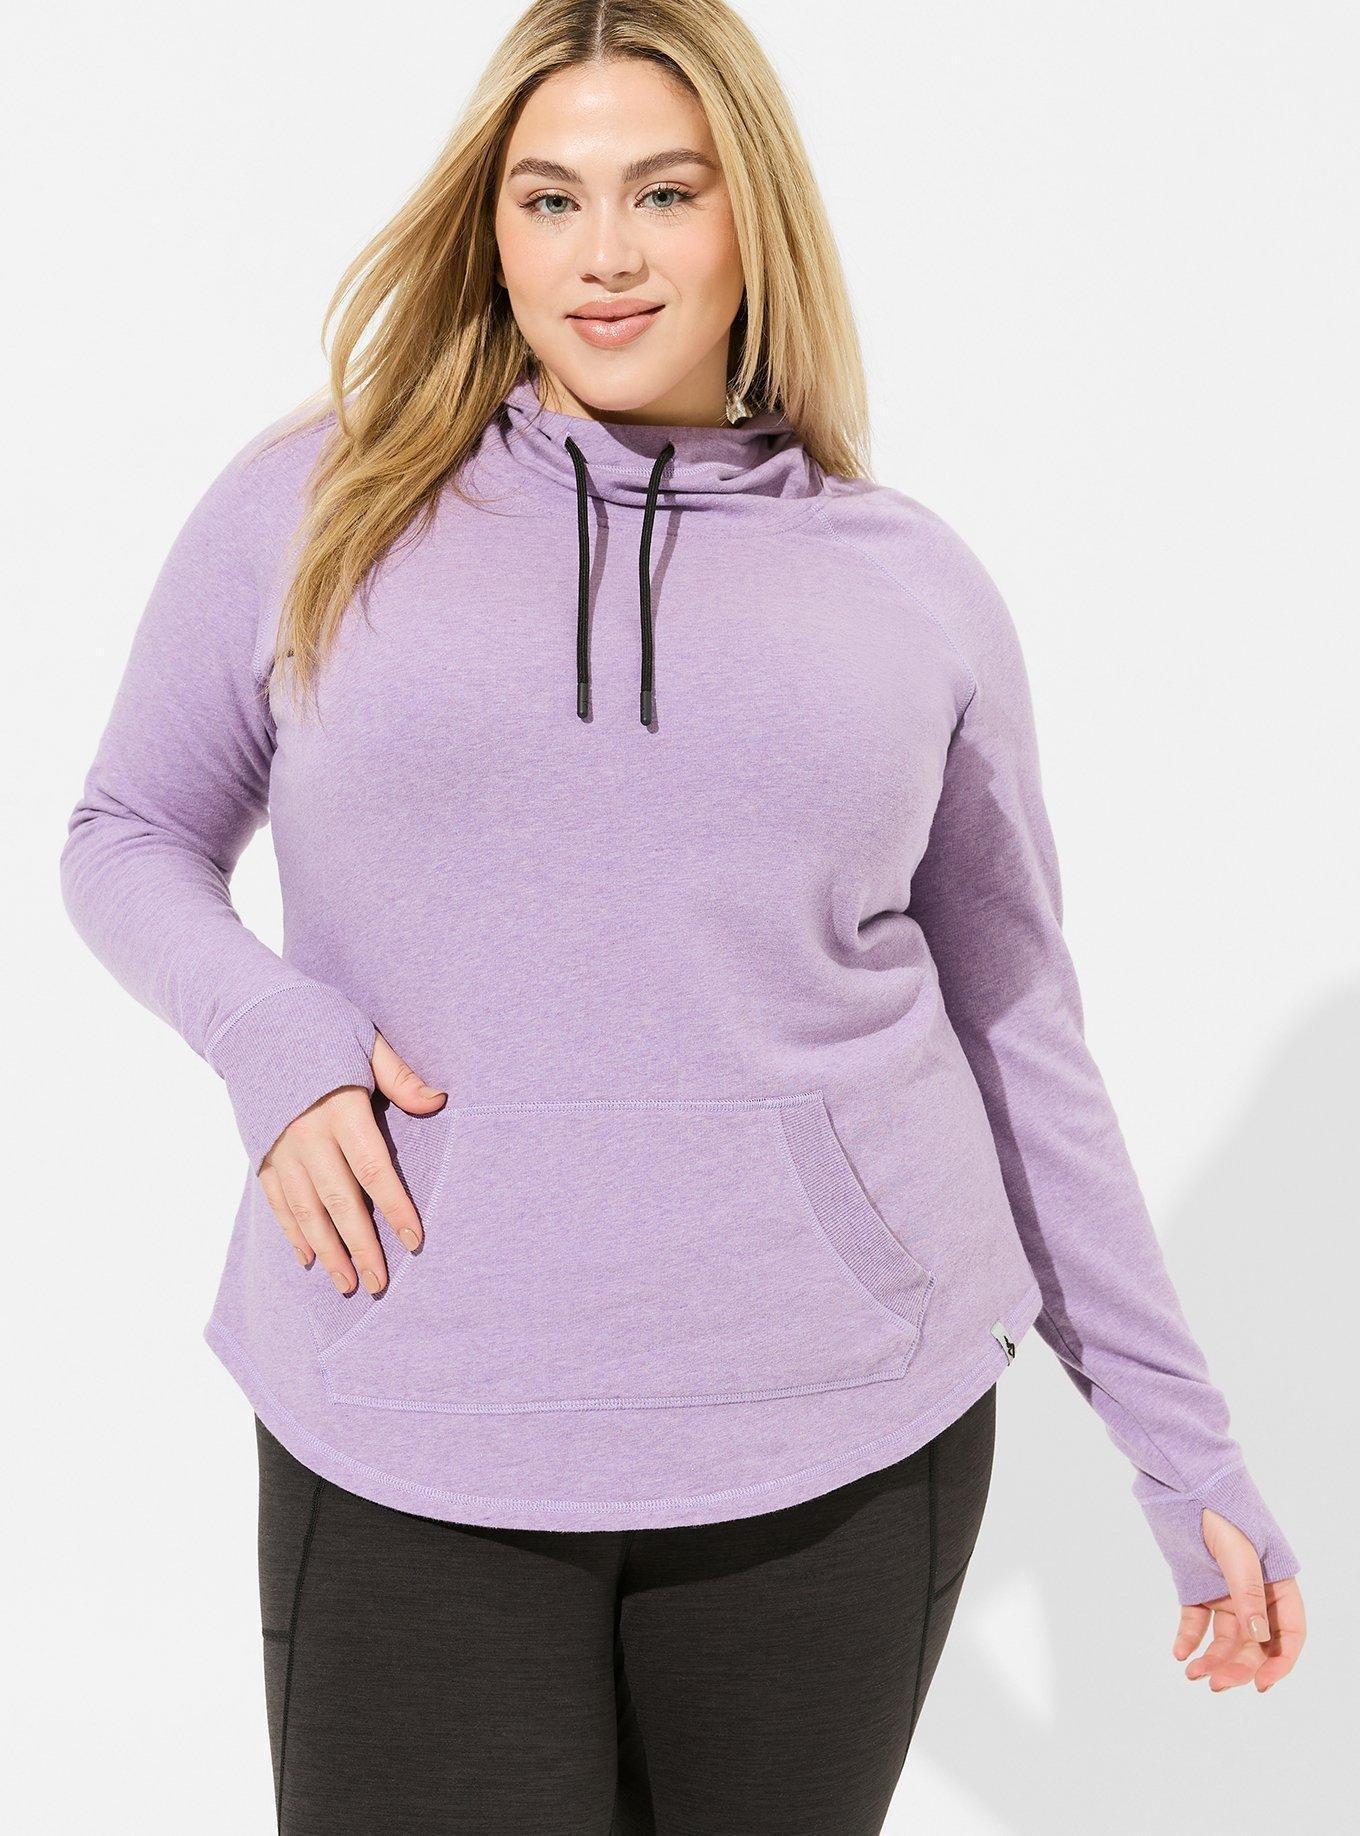 Women's Cowl Neck Hoodie Sweatshirt with Thumb Holes - Oversized, Loose  Loungewear Cotton Hoodie